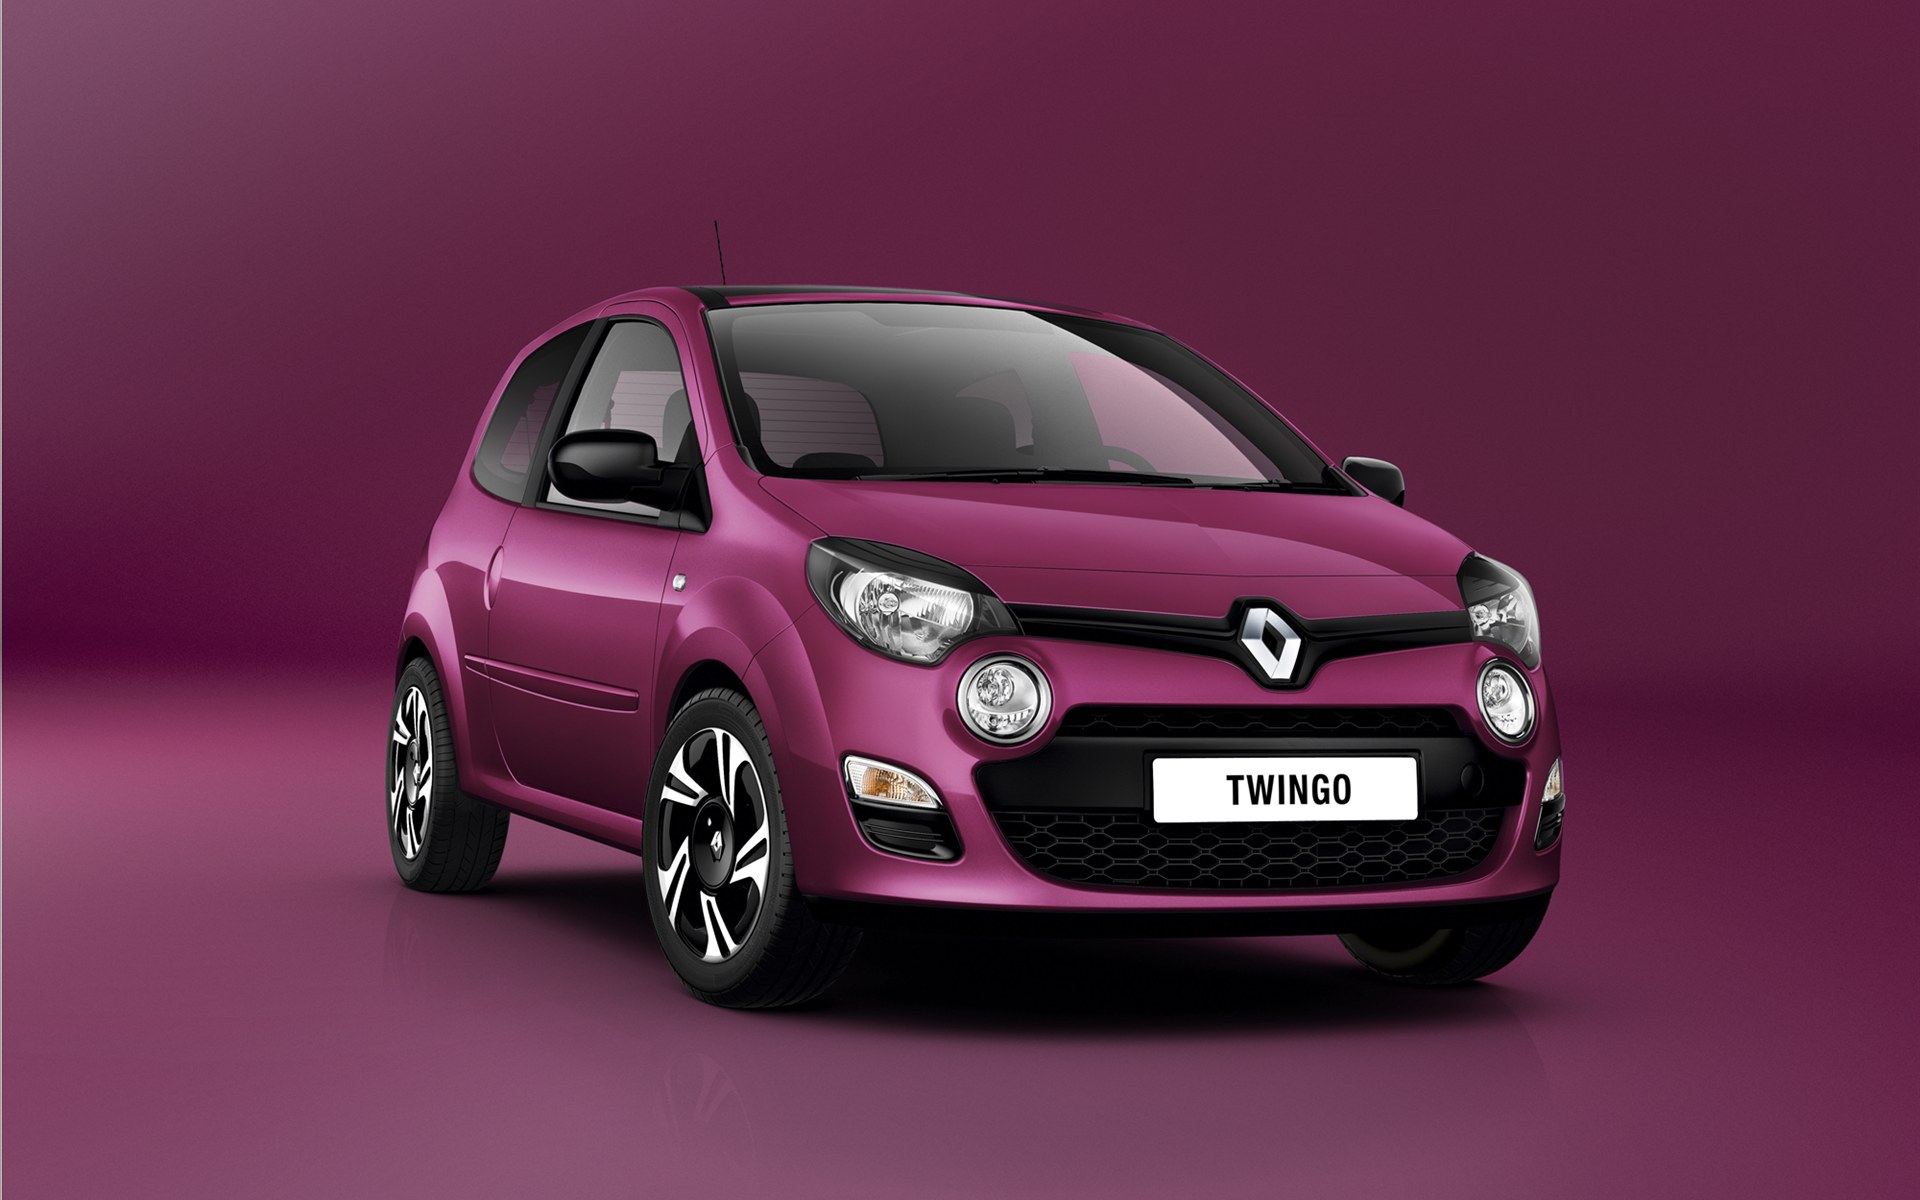 2012 Renault Twingo Wallpaper | HD Car Wallpapers | ID #2238